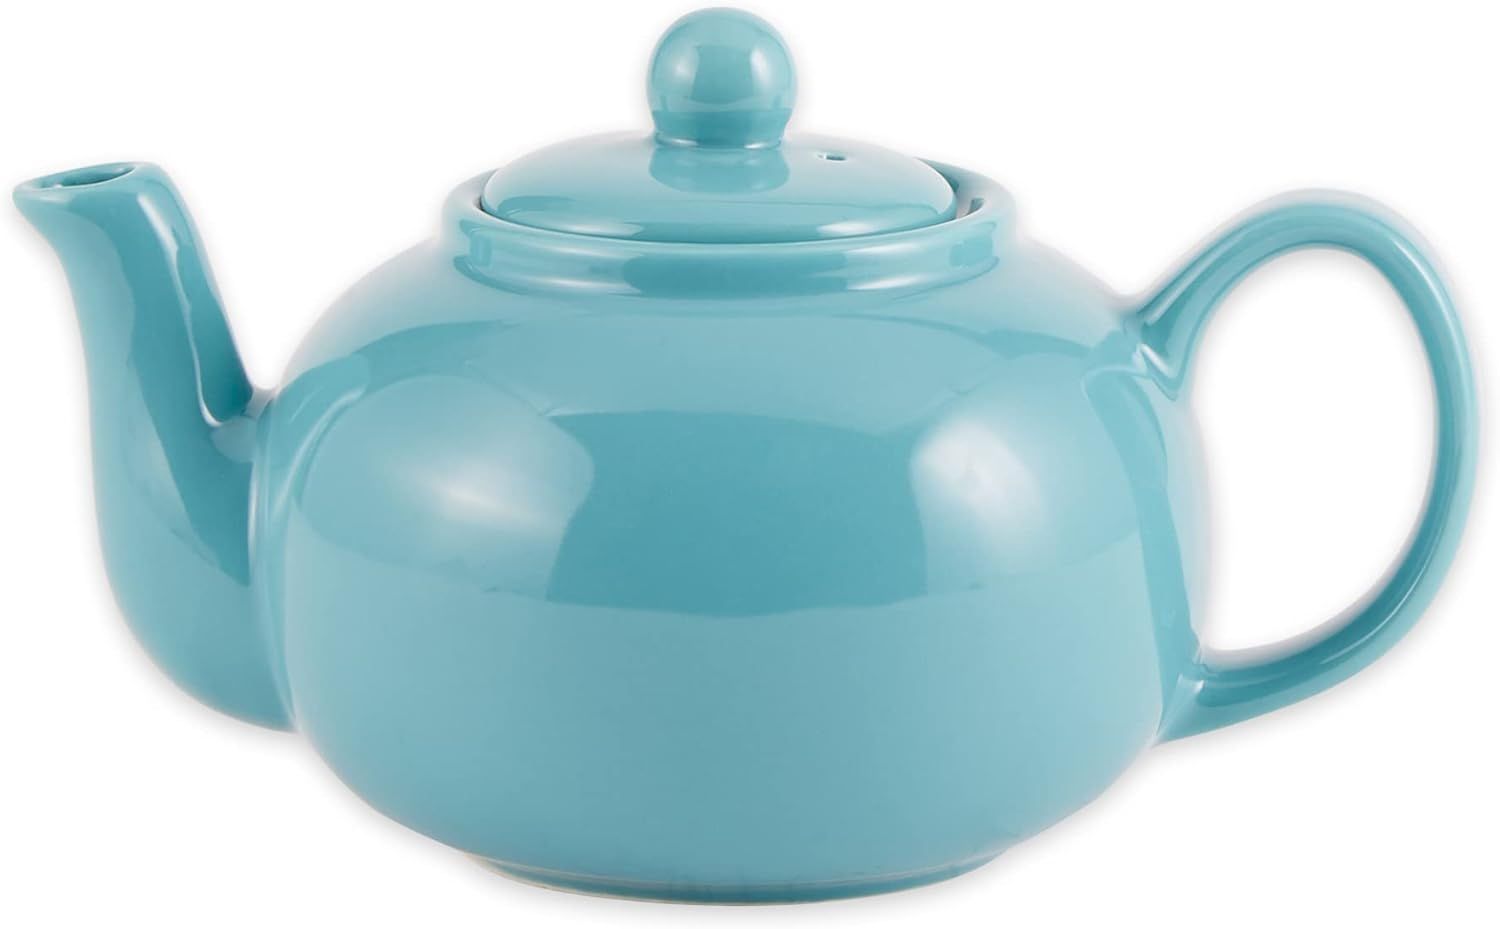 RSVP International Stoneware Teapot Collection, Microwave and Dishwasher Safe, 16 oz, Turquoise | Amazon (US)